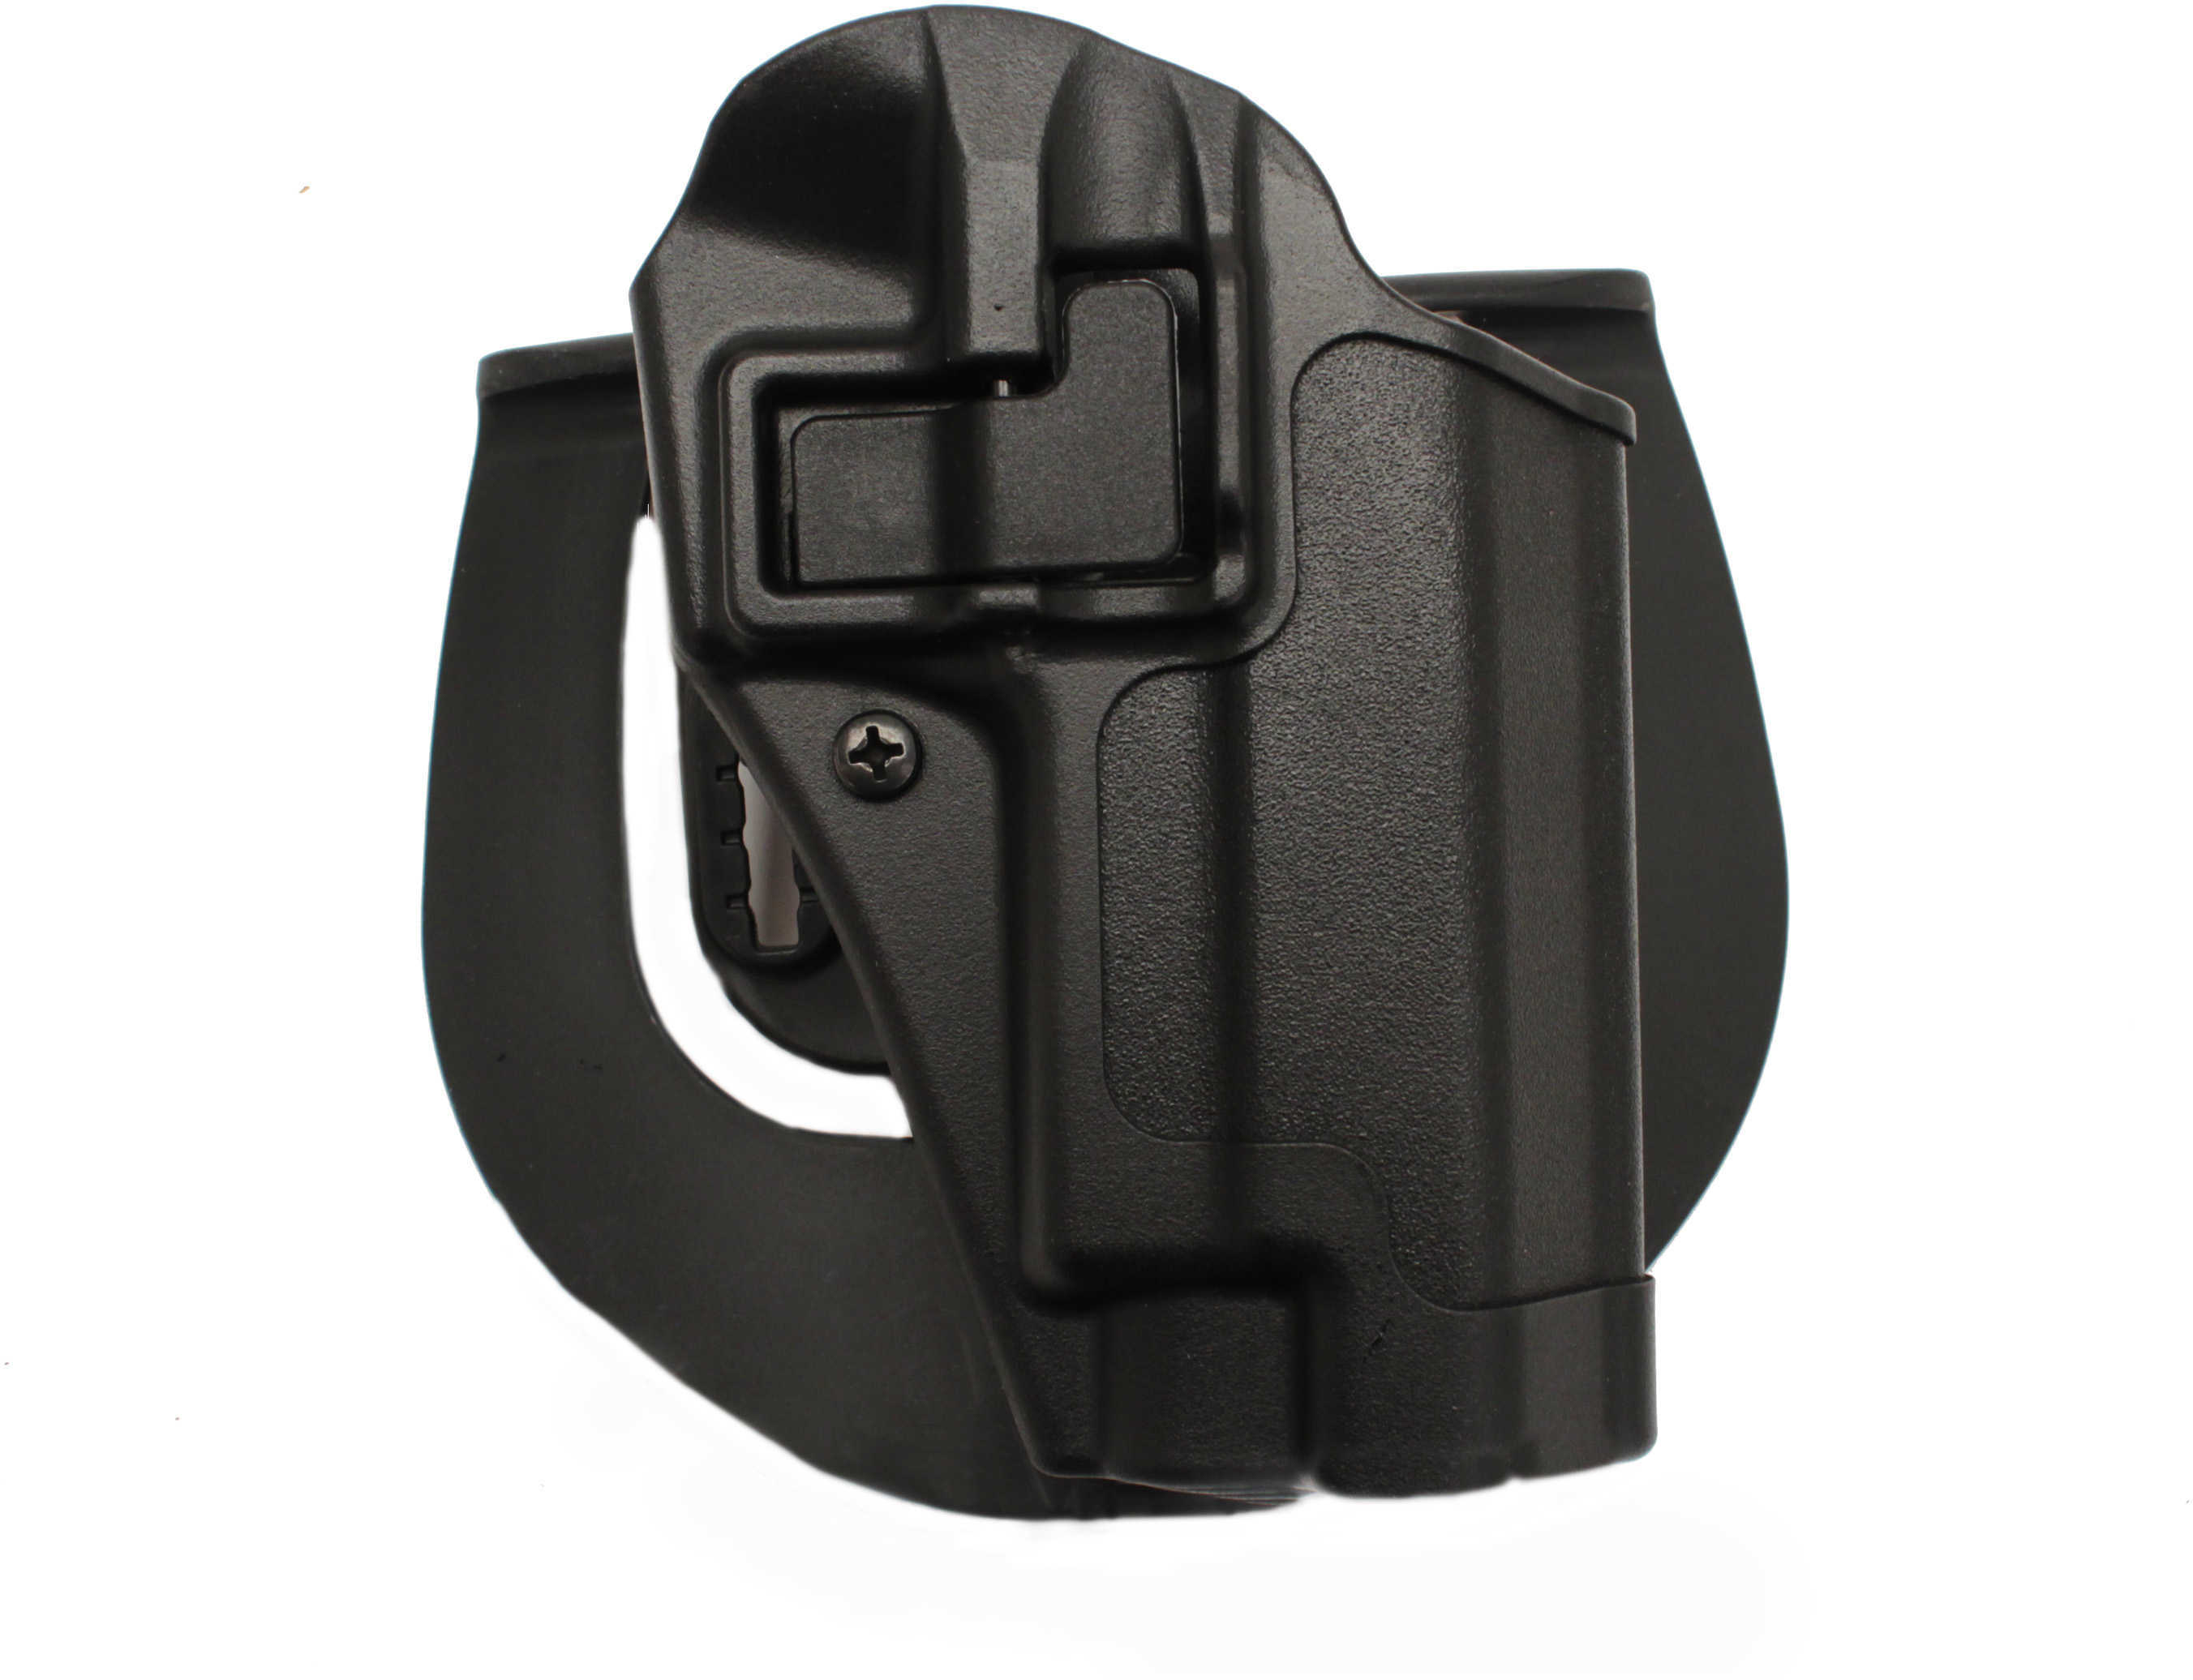 Blackhawk Close Quarters Concealment Holster For Sig Sauer Model P220/P226 Md: 410506BKR